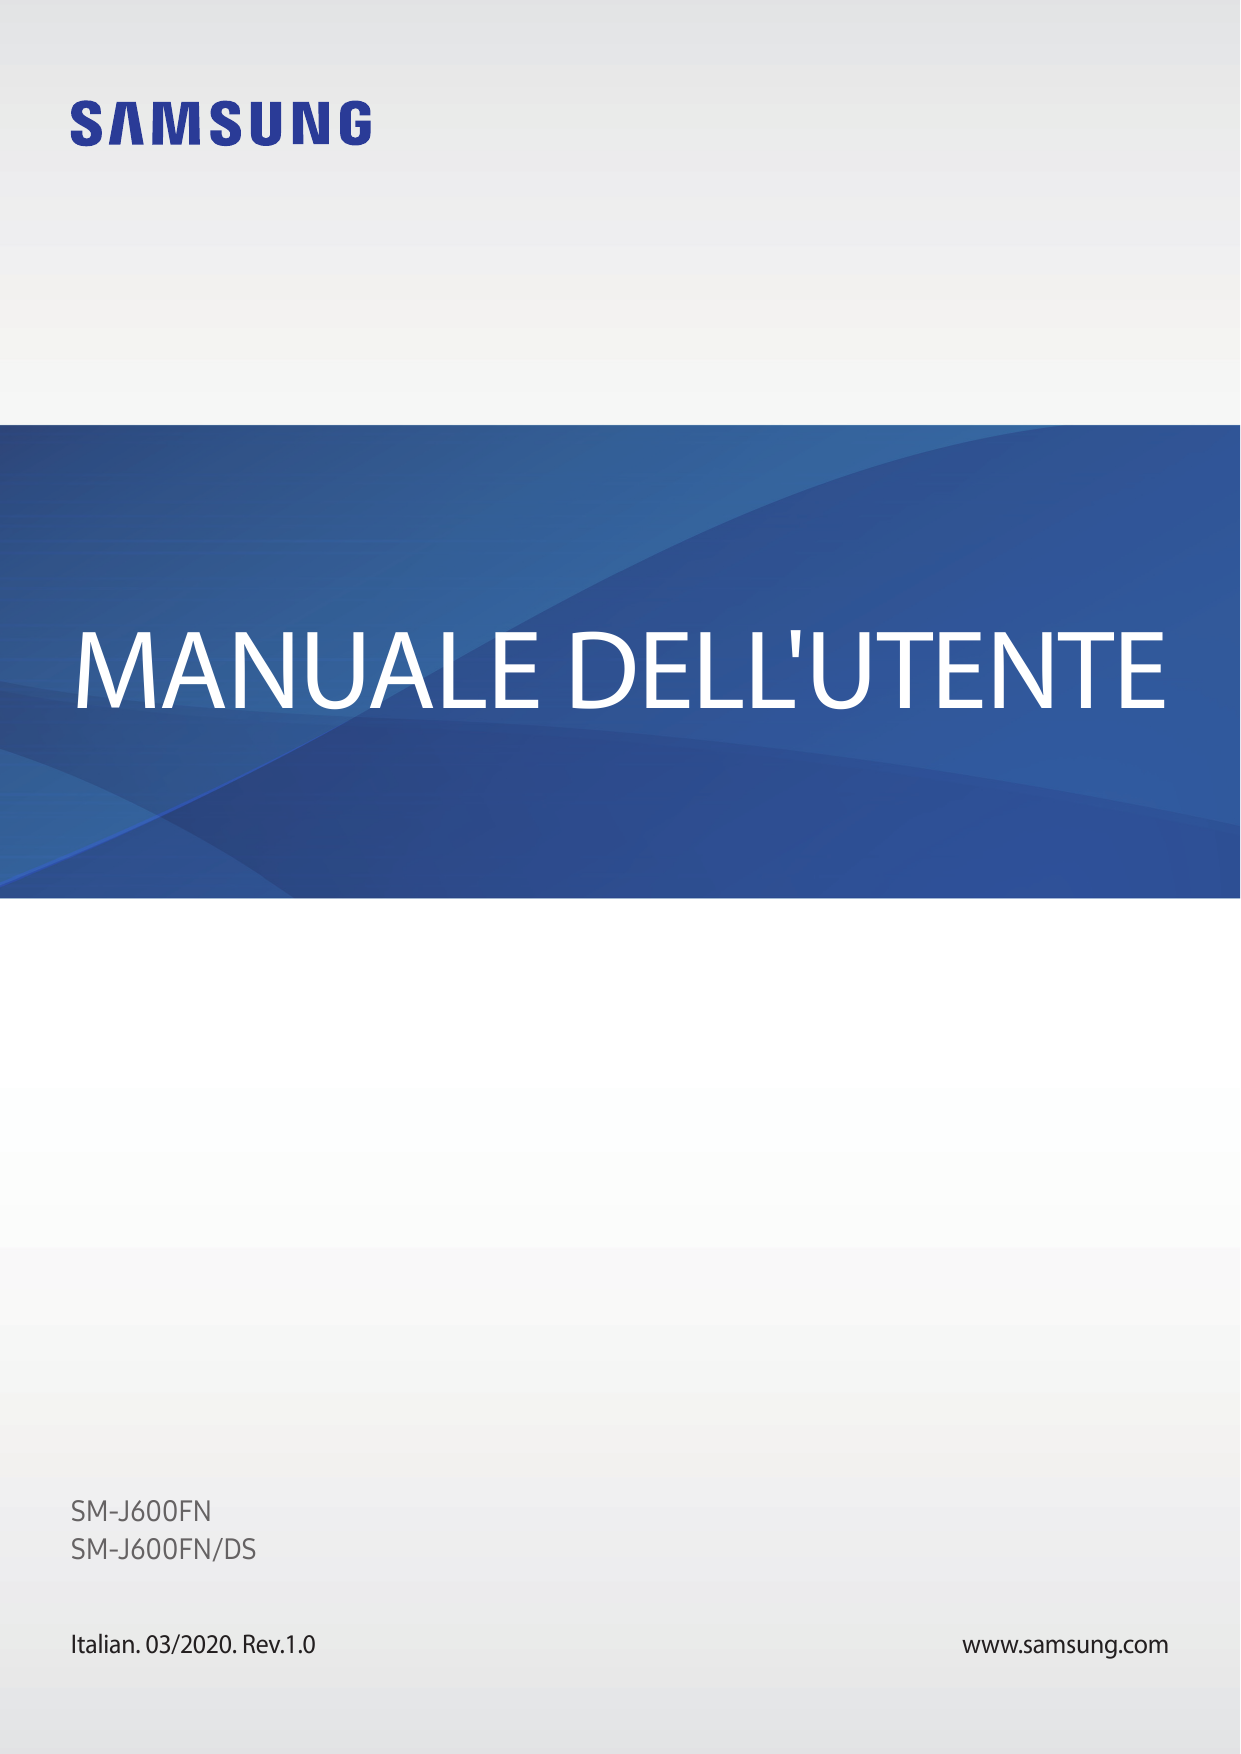 MANUALE DELL'UTENTESM-J600FNSM-J600FN/DSItalian. 03/2020. Rev.1.0www.samsung.com